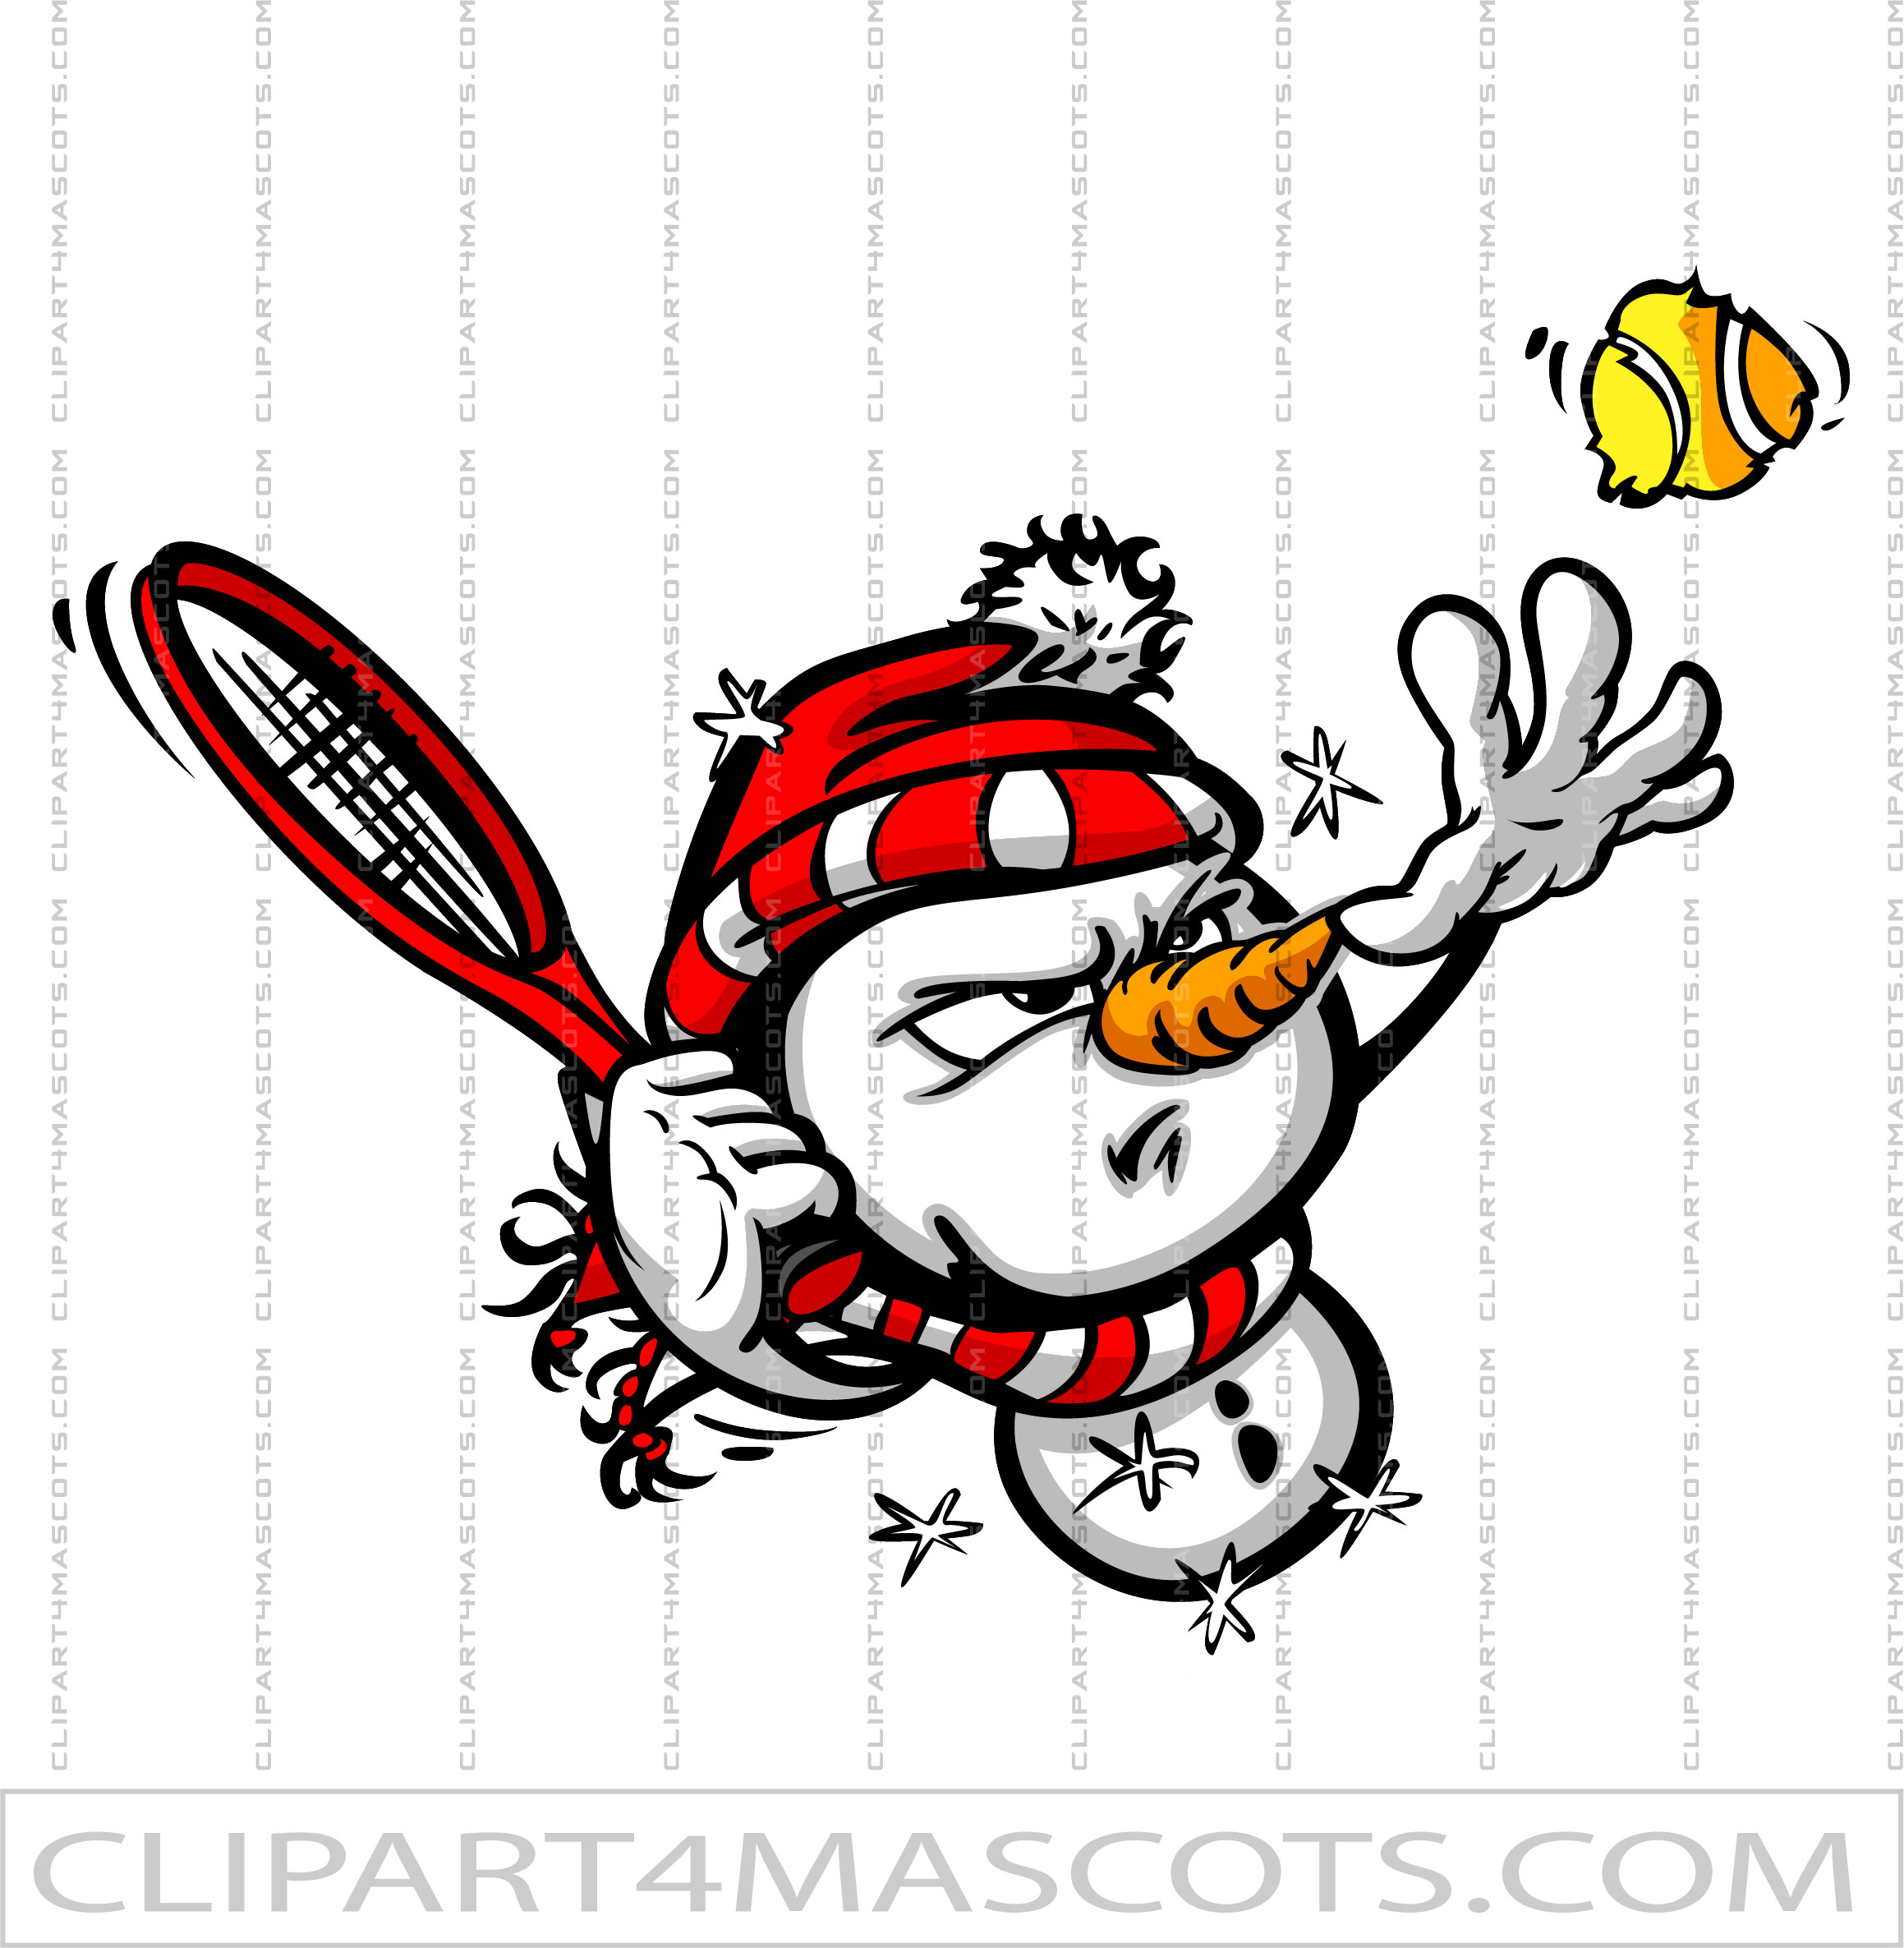 Snowman Tennis Player Image